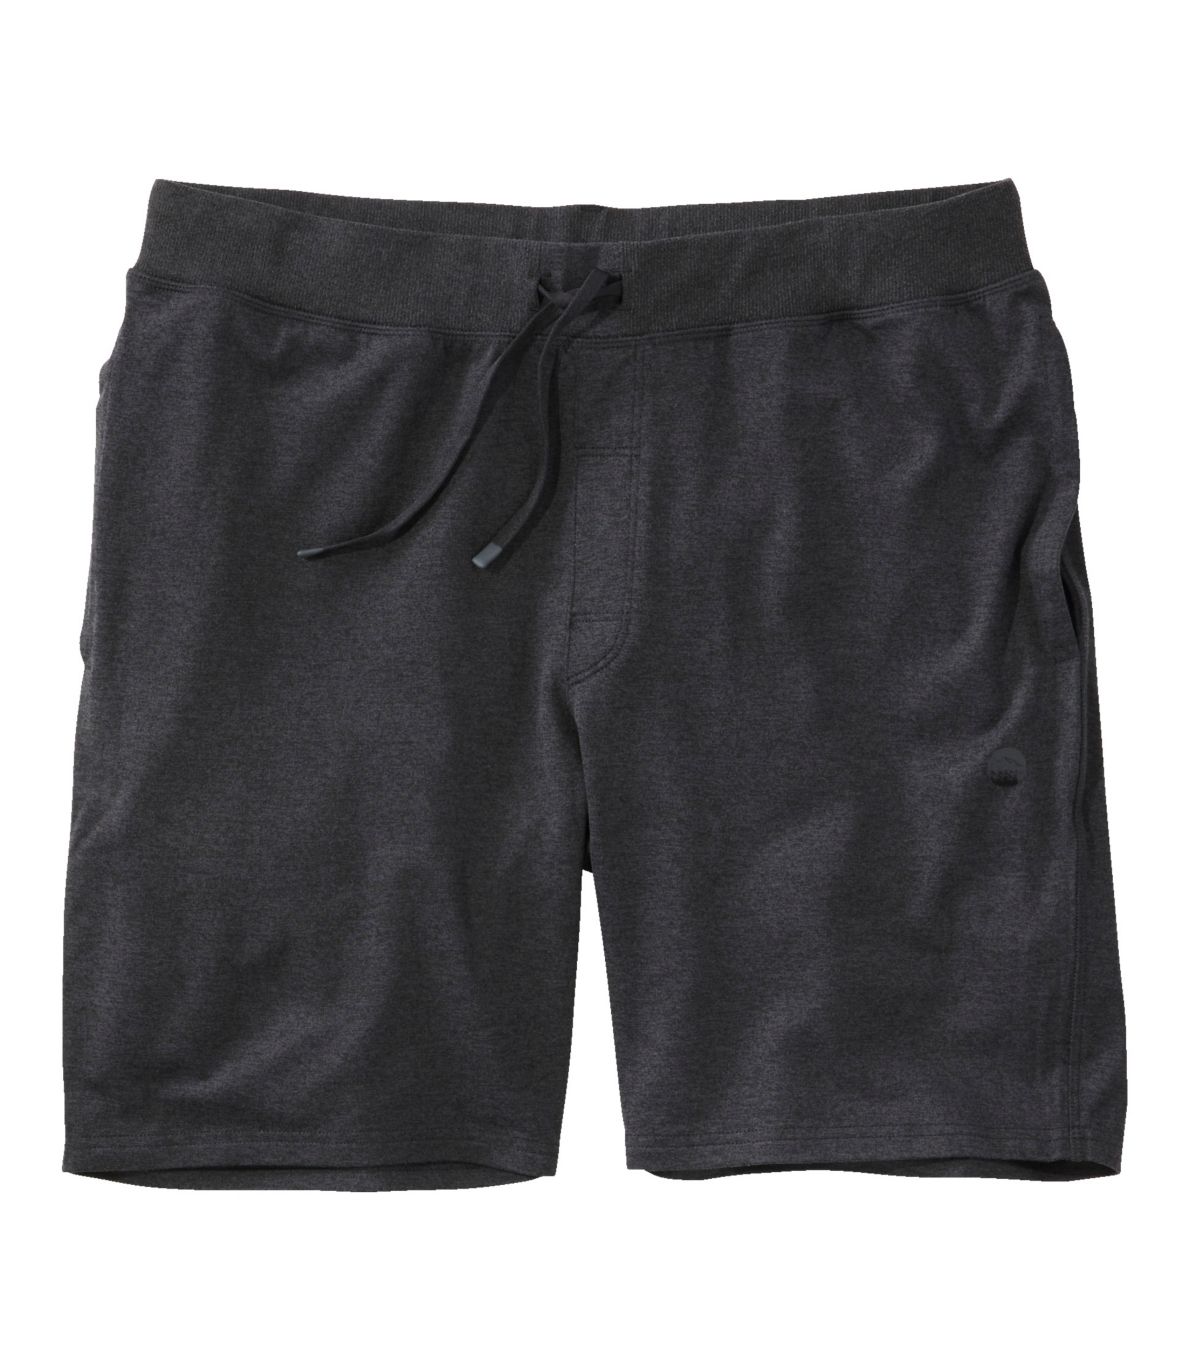 Men's VentureSoft Shorts, 8"